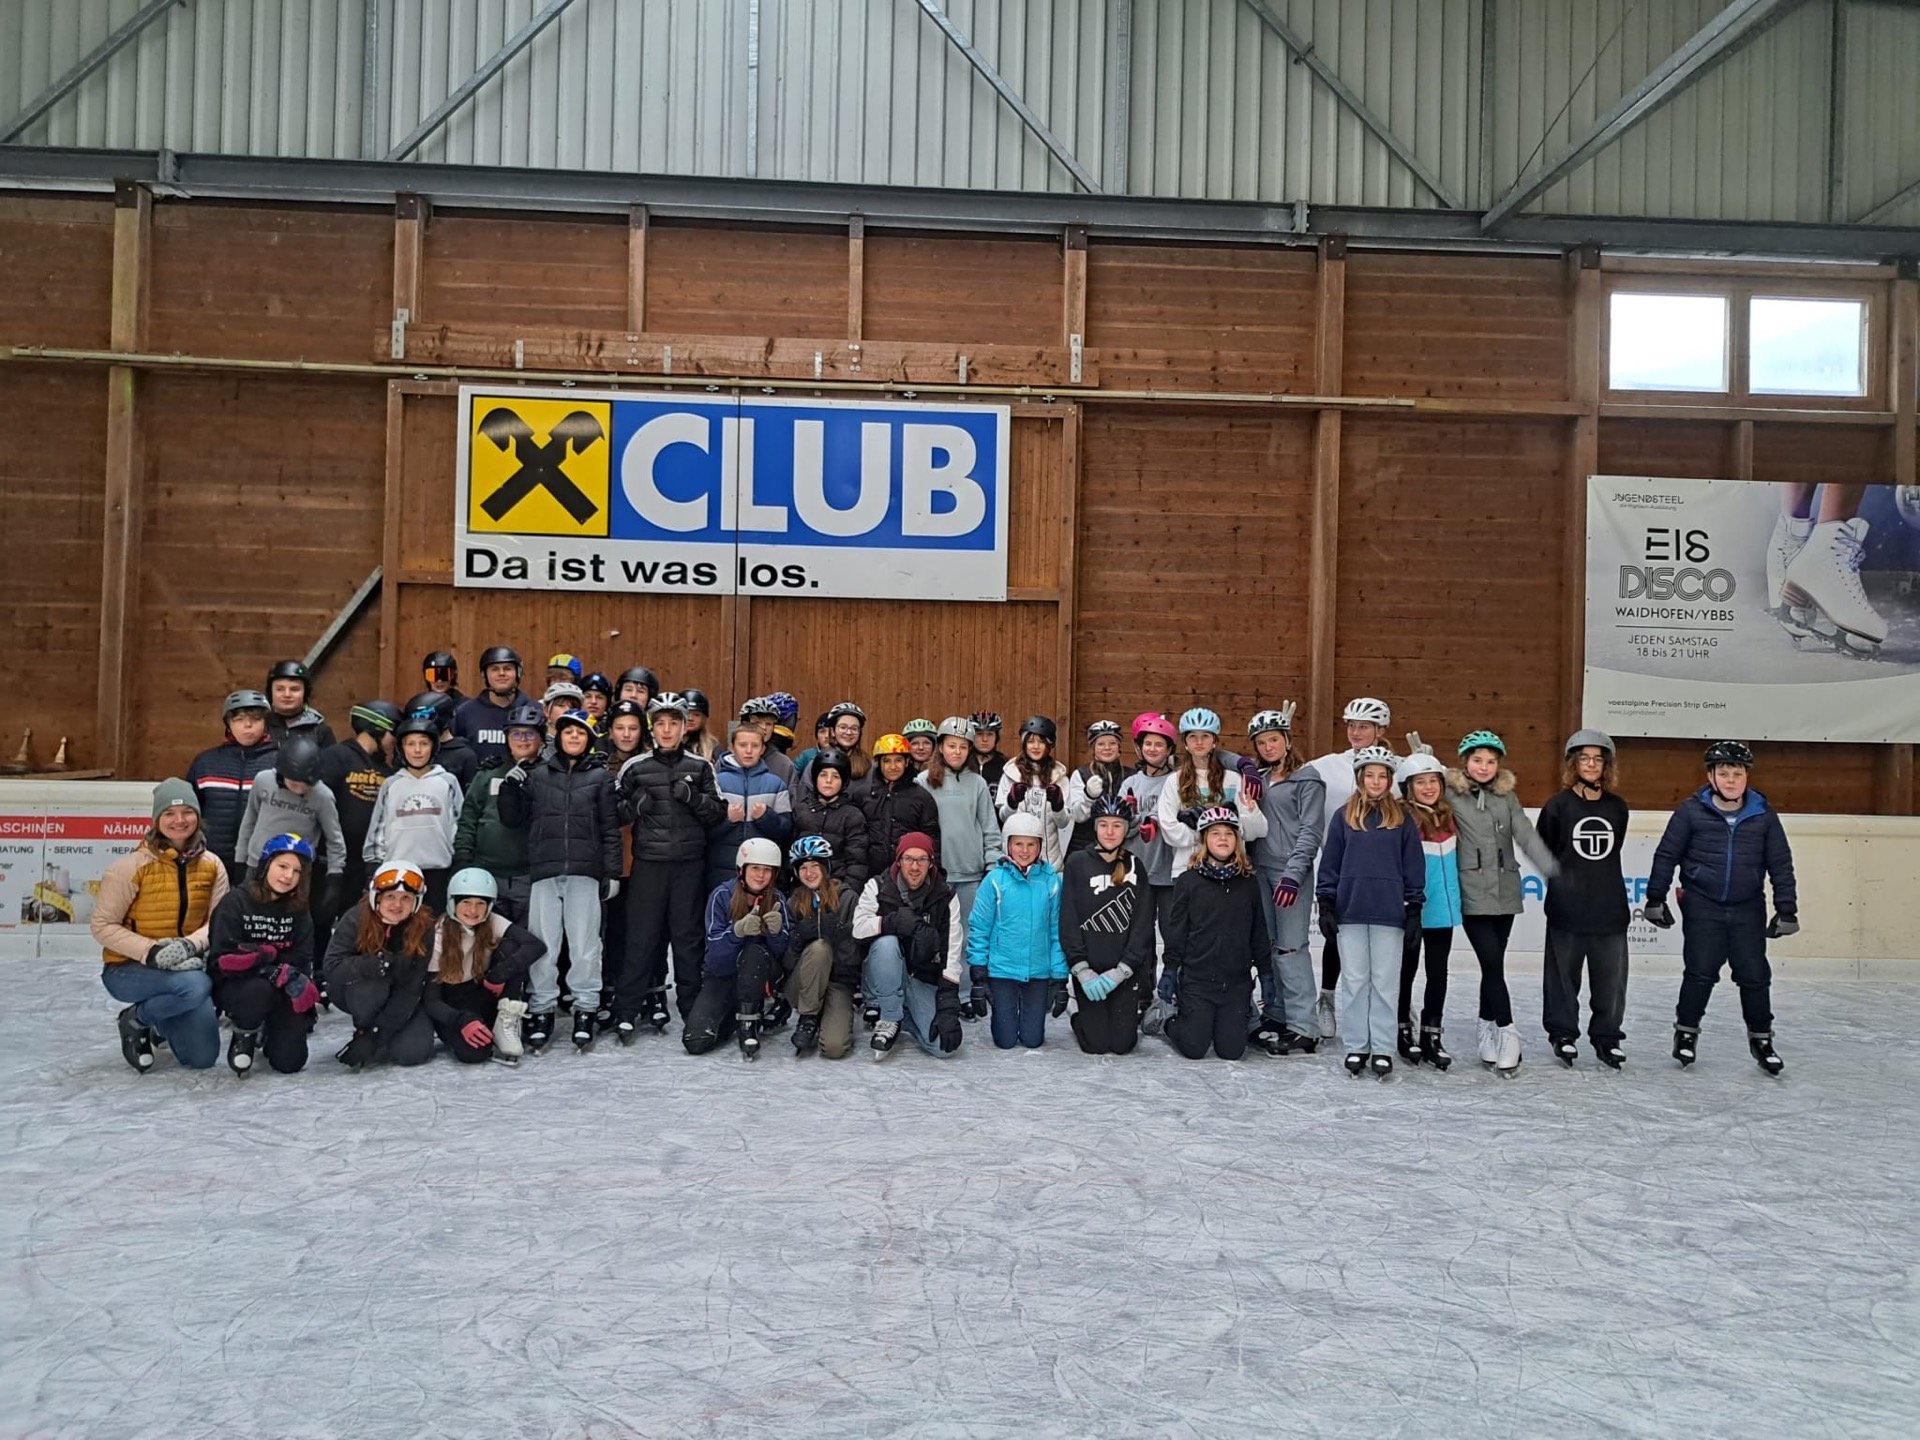 Eislaufen in Waidhofen/Ybbs - 1. - 4. Klassen - Bild 1